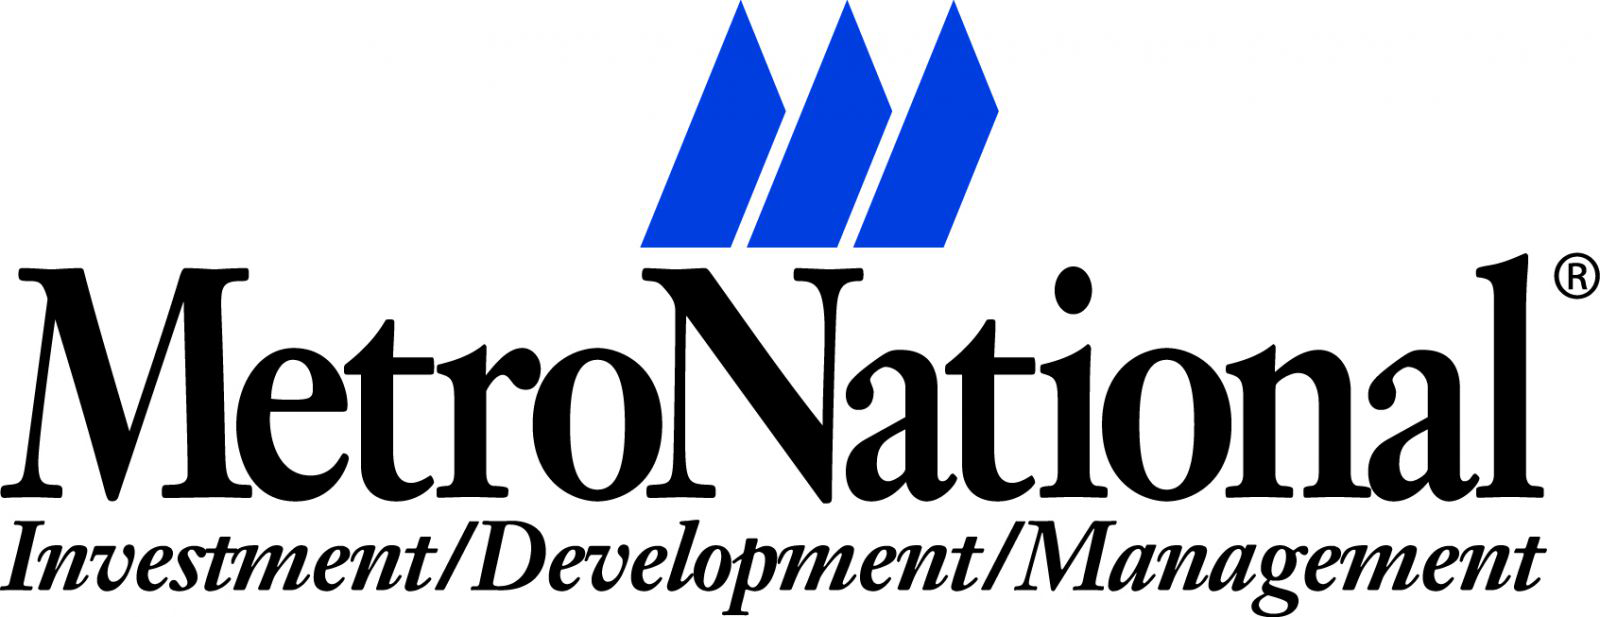 MetroNational Company Logo